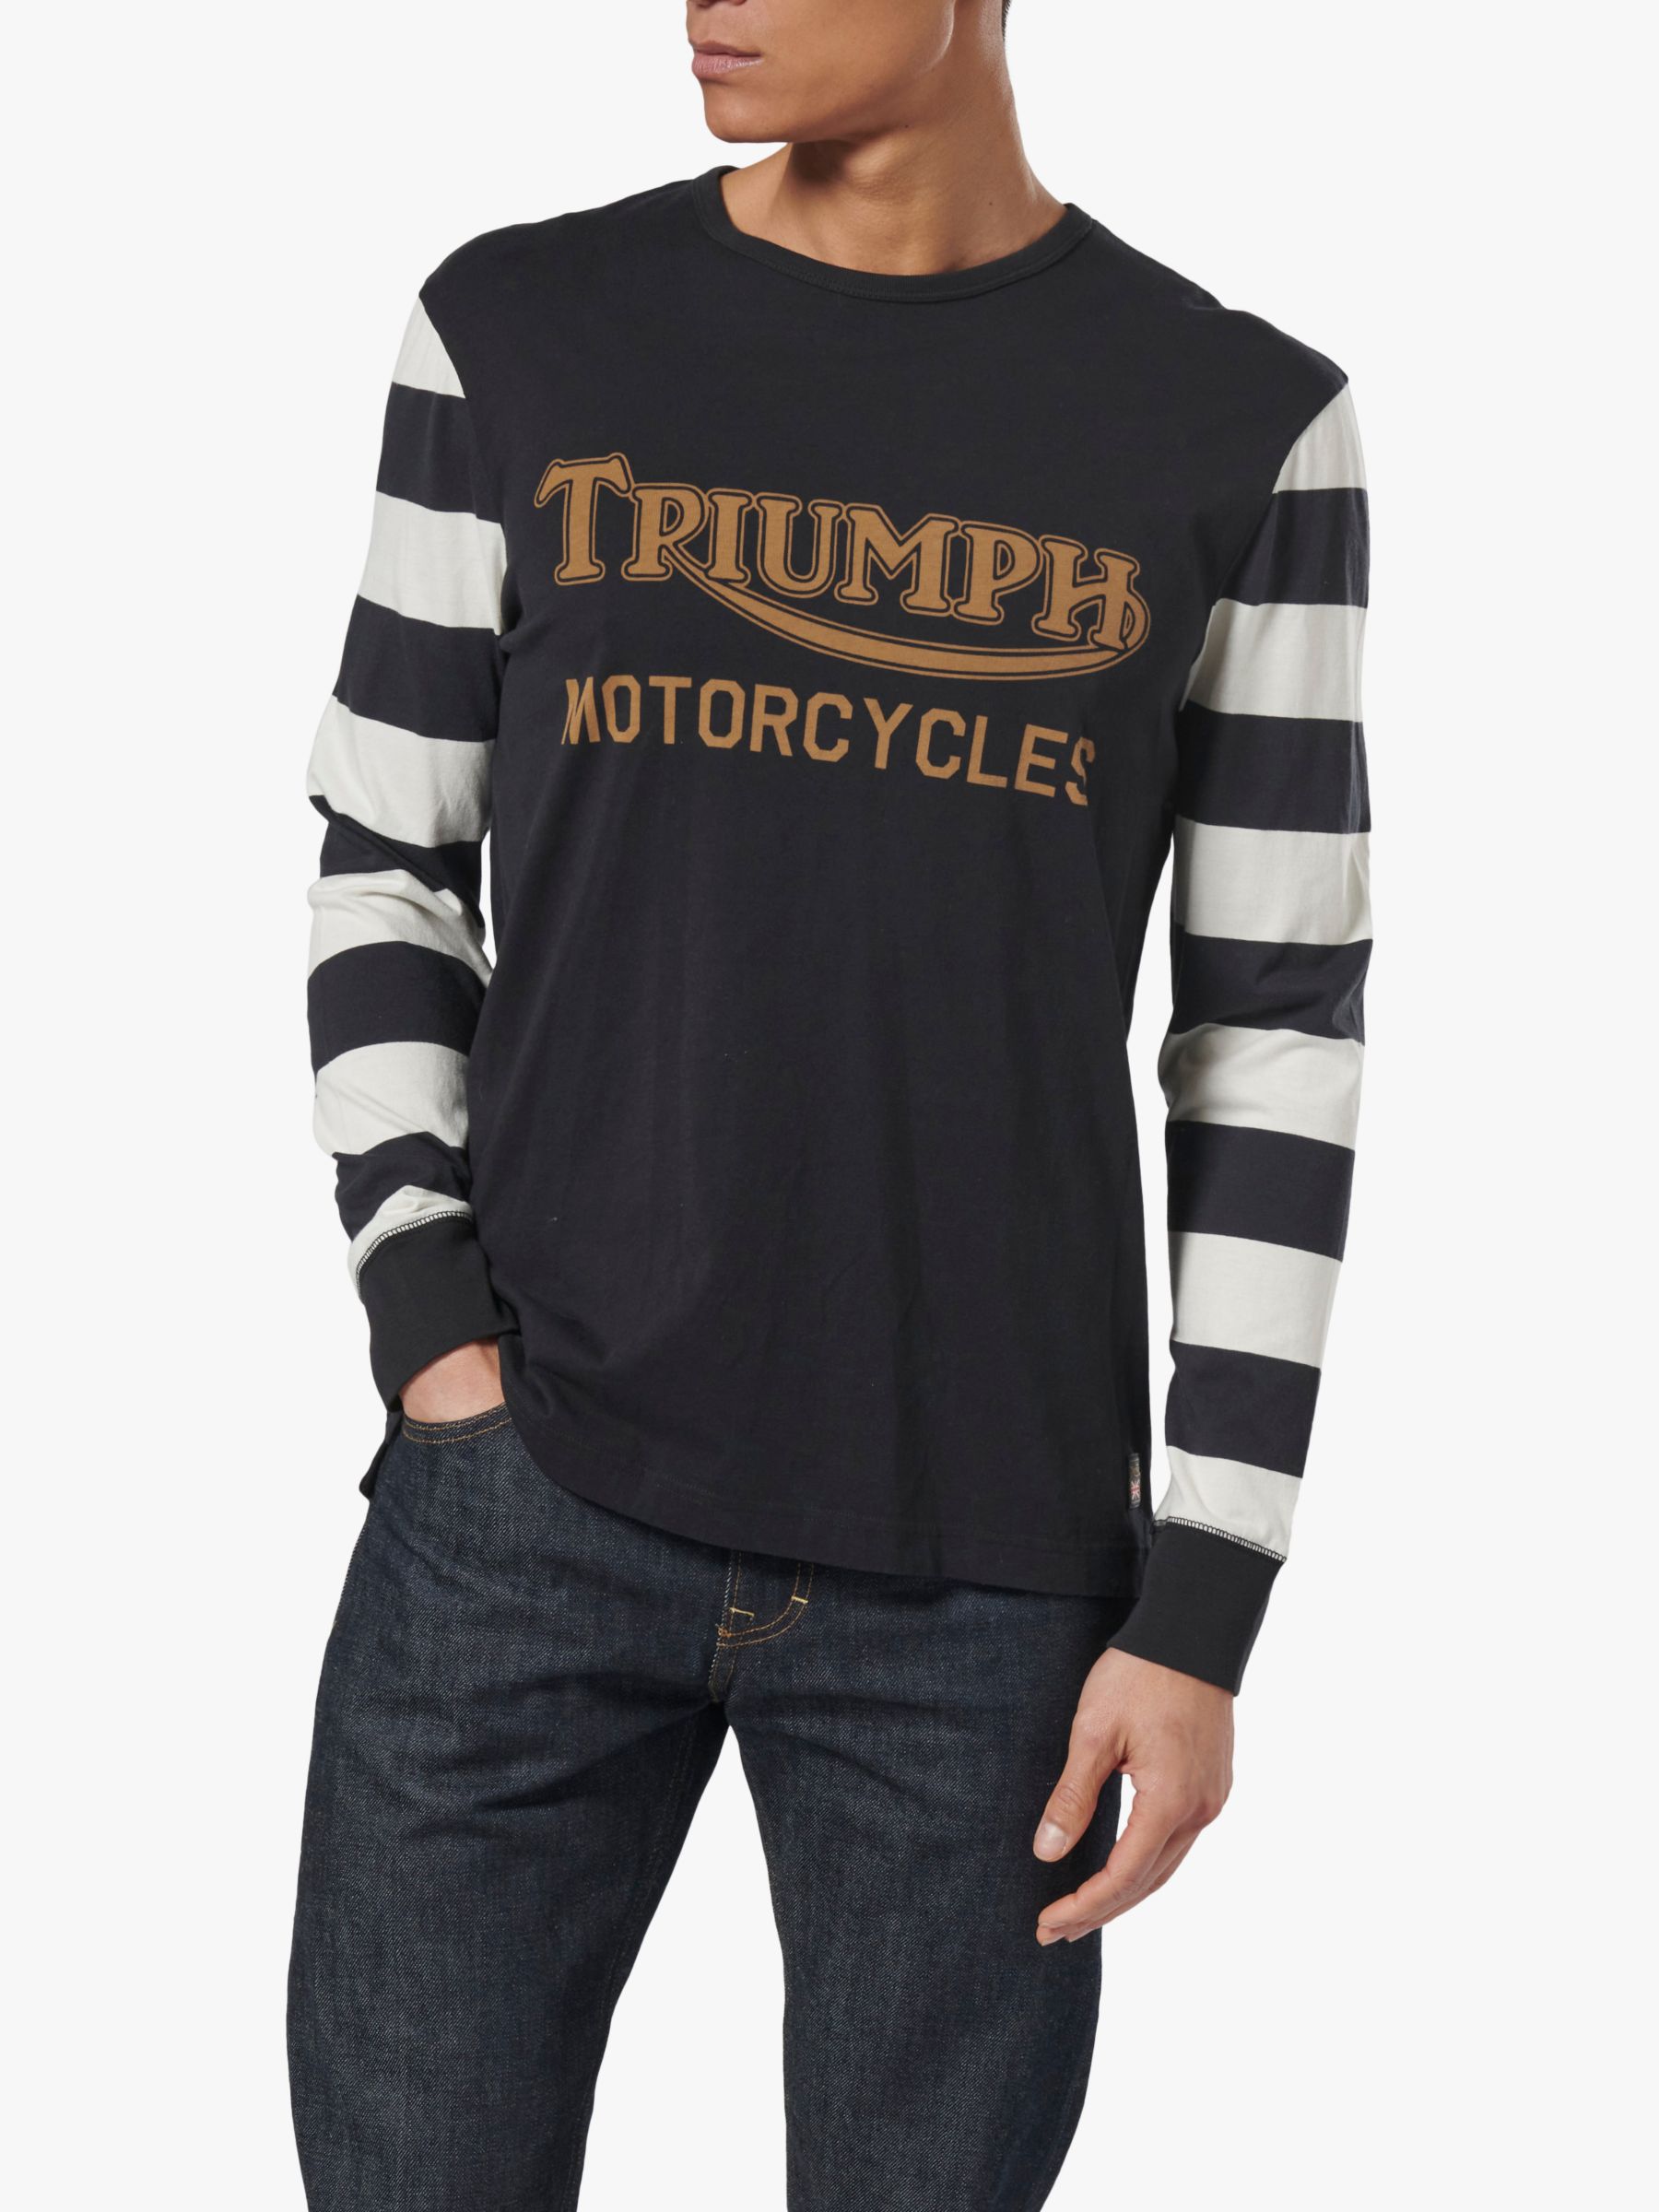 Triumph Motorcycles Ignition Long Sleeve T-Shirt, Black, XL